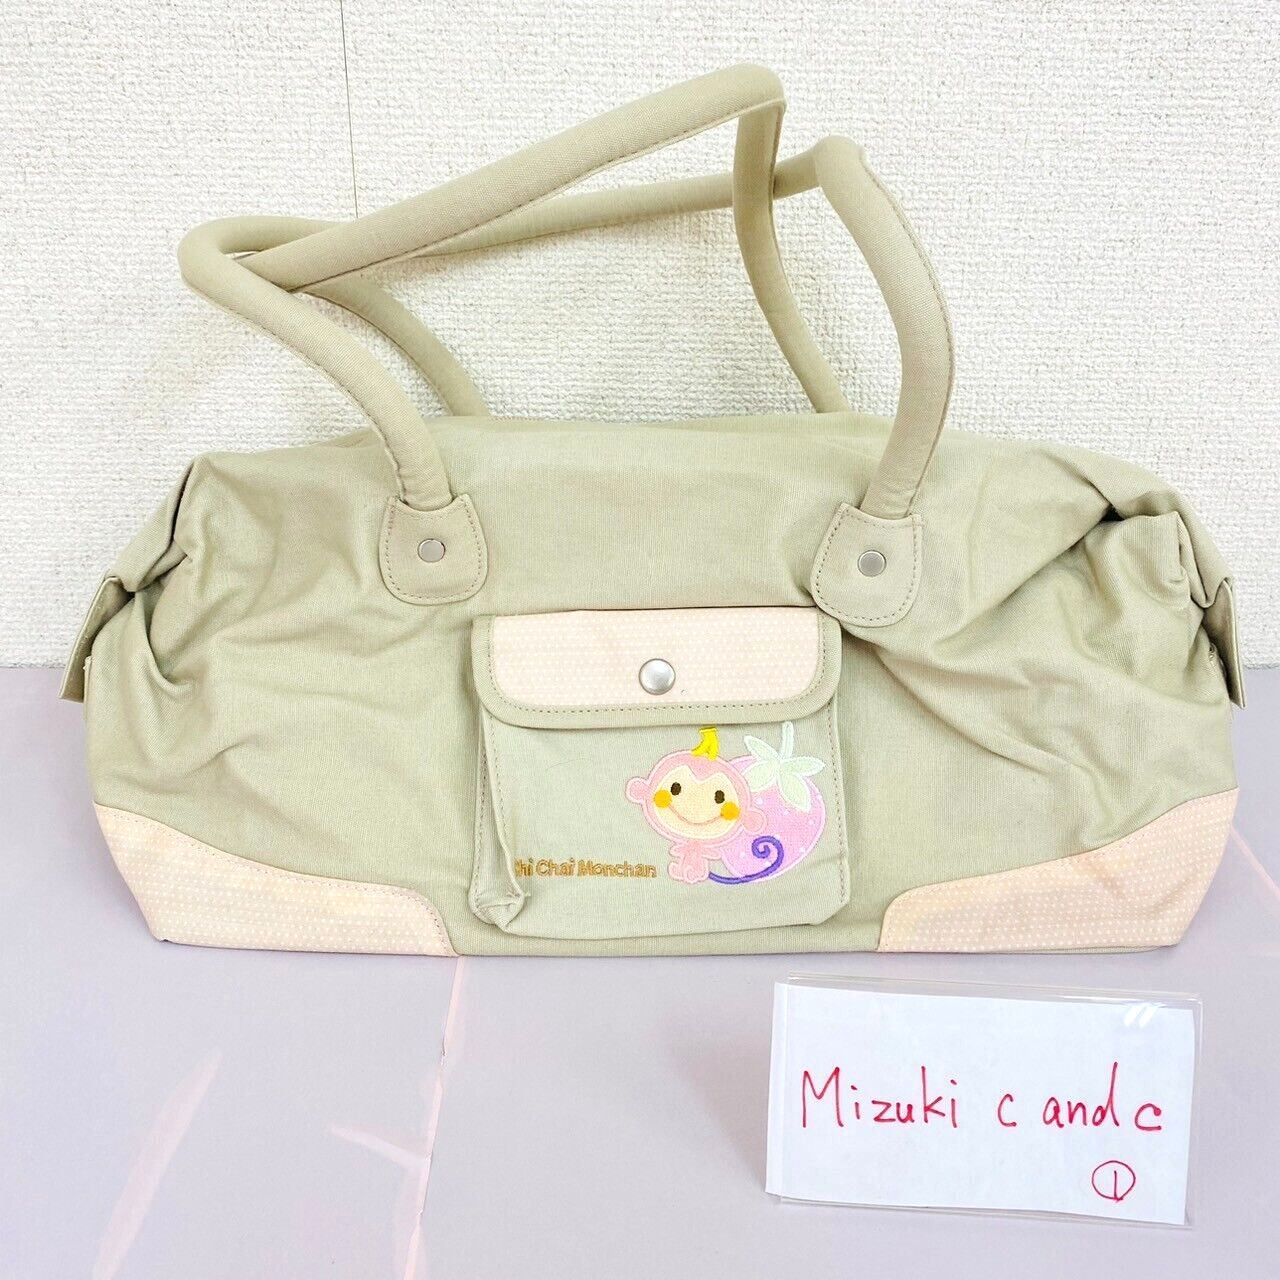 Sanrio Chi Chai Monchan Tote Bag Handbag Pink Monkey Strawberry Beige Simple